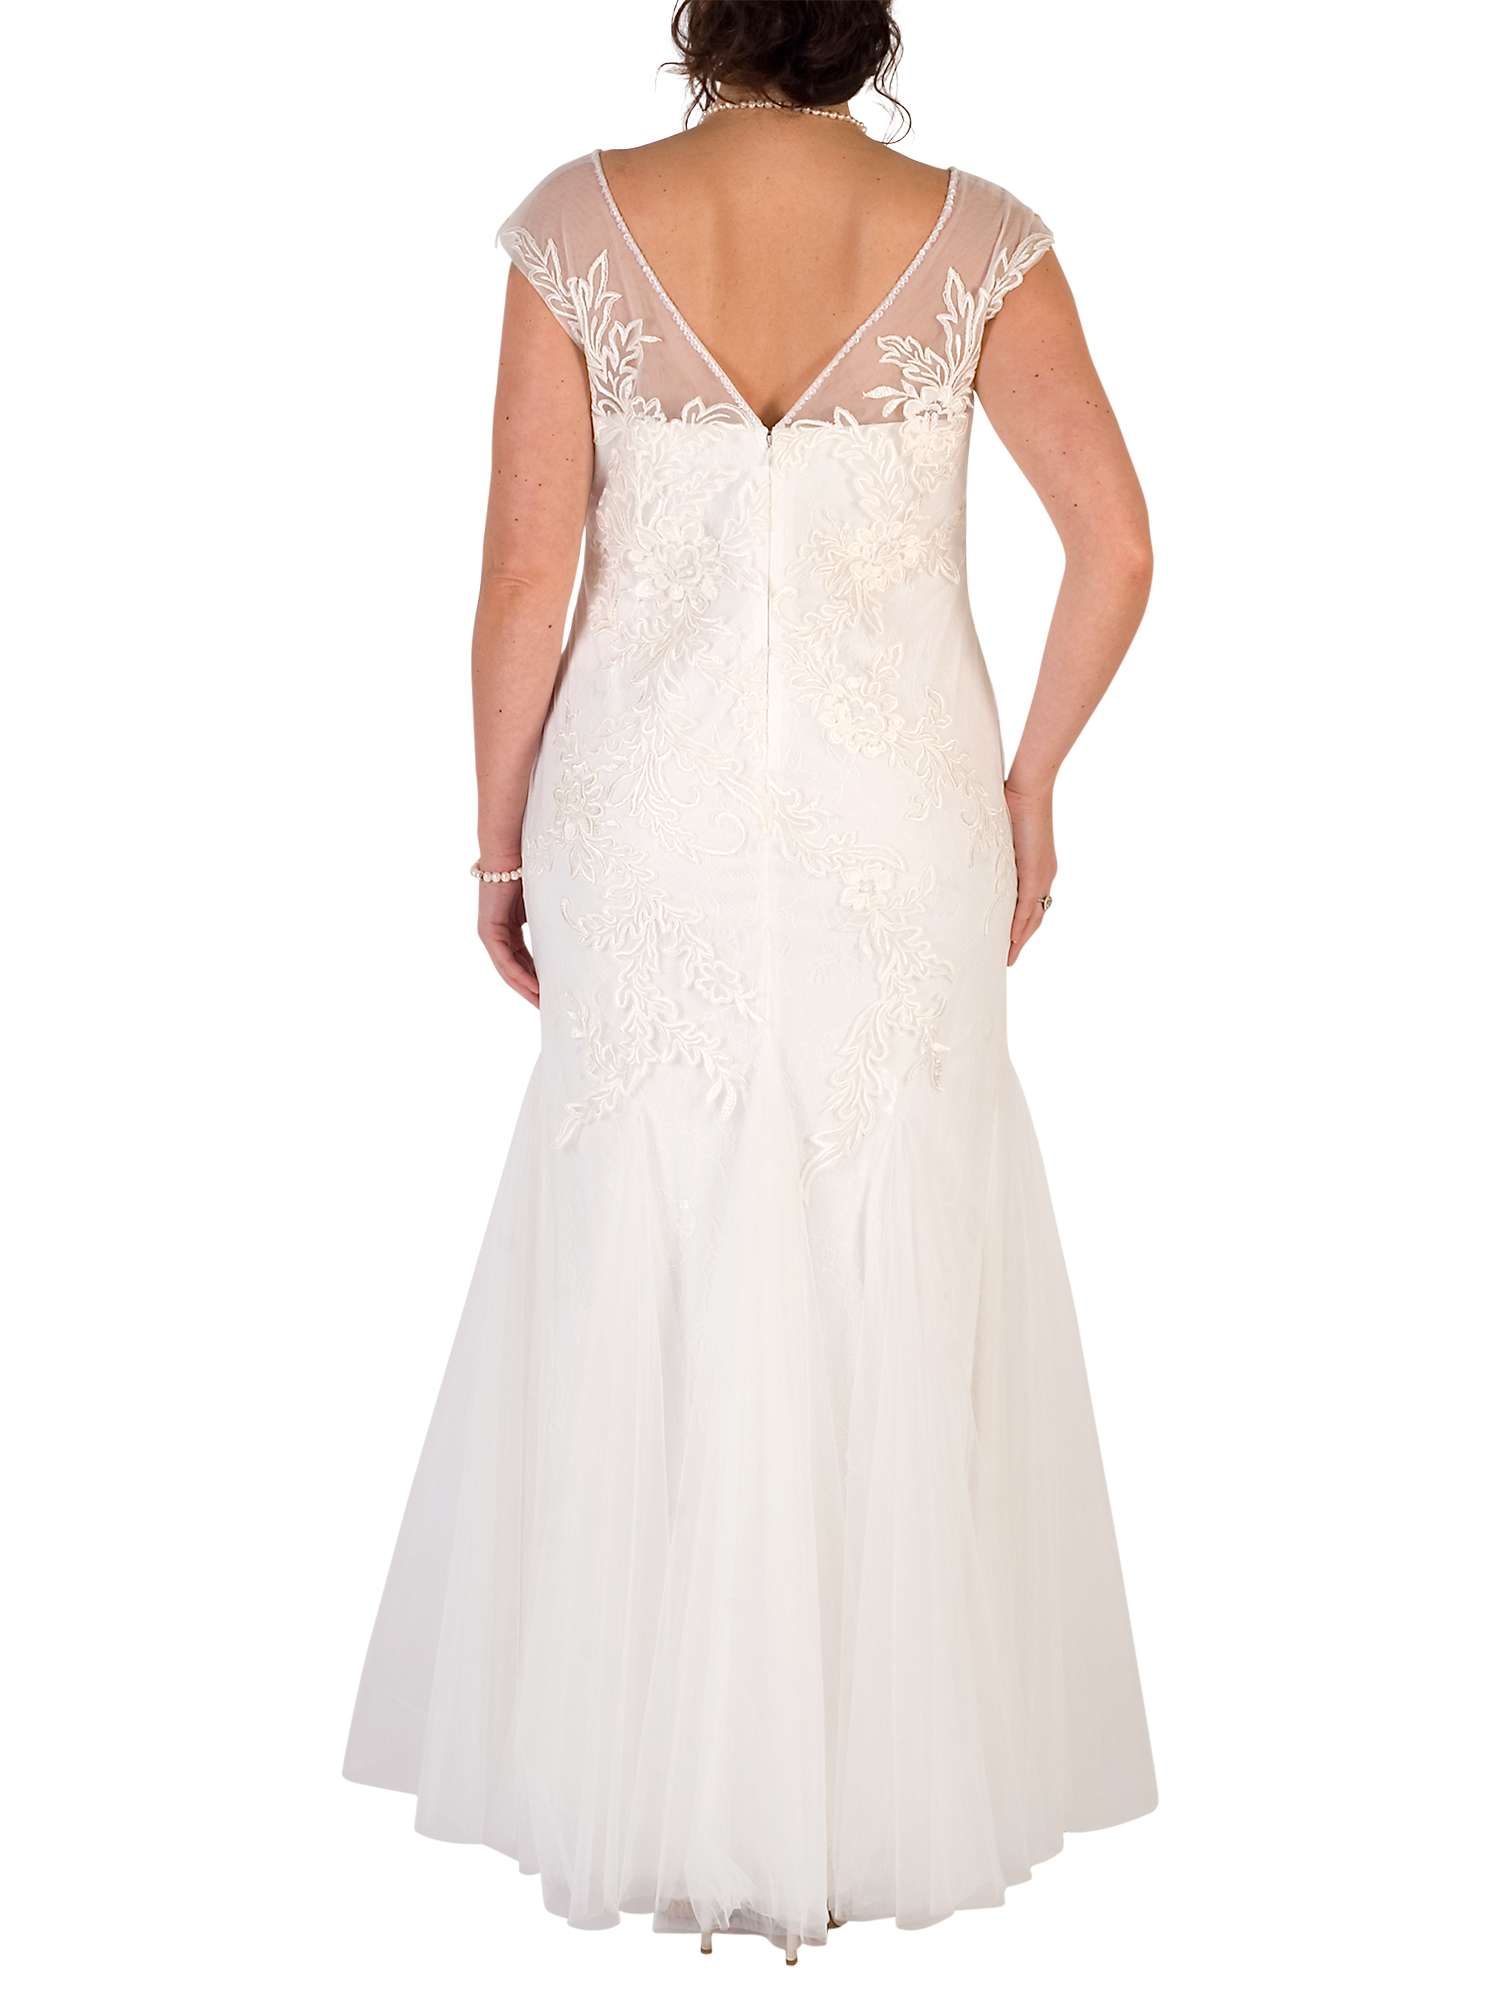 Buy Chesca Godet Tulle Wedding Dress, Ivory Online at johnlewis.com